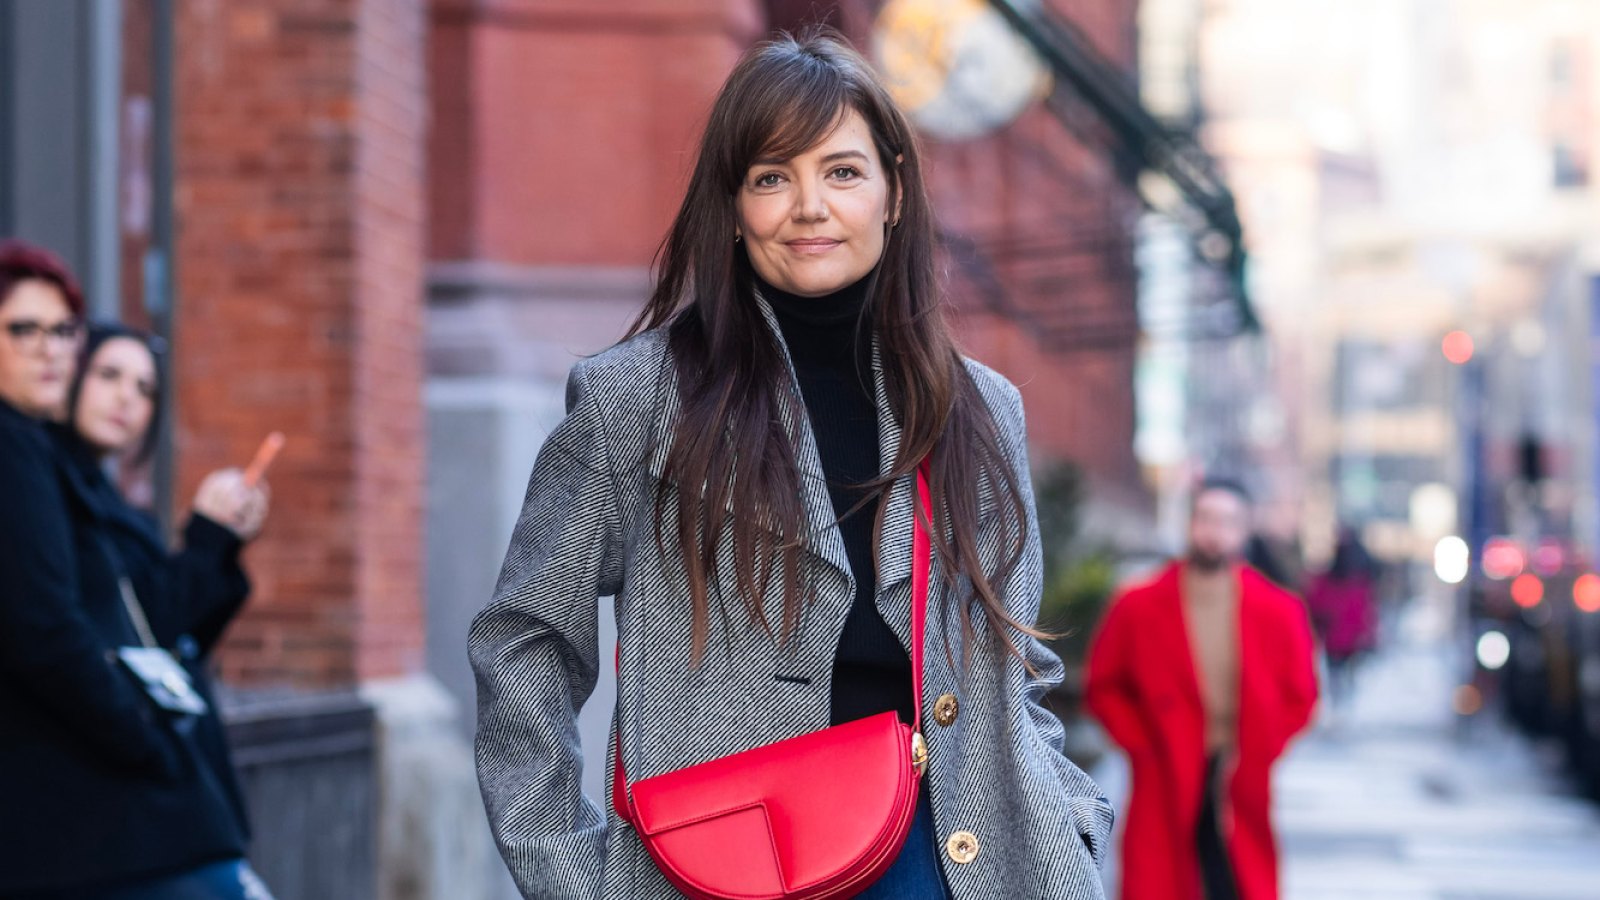 Get Katie Holmes' Red Crossbody Bag Look for Under $50